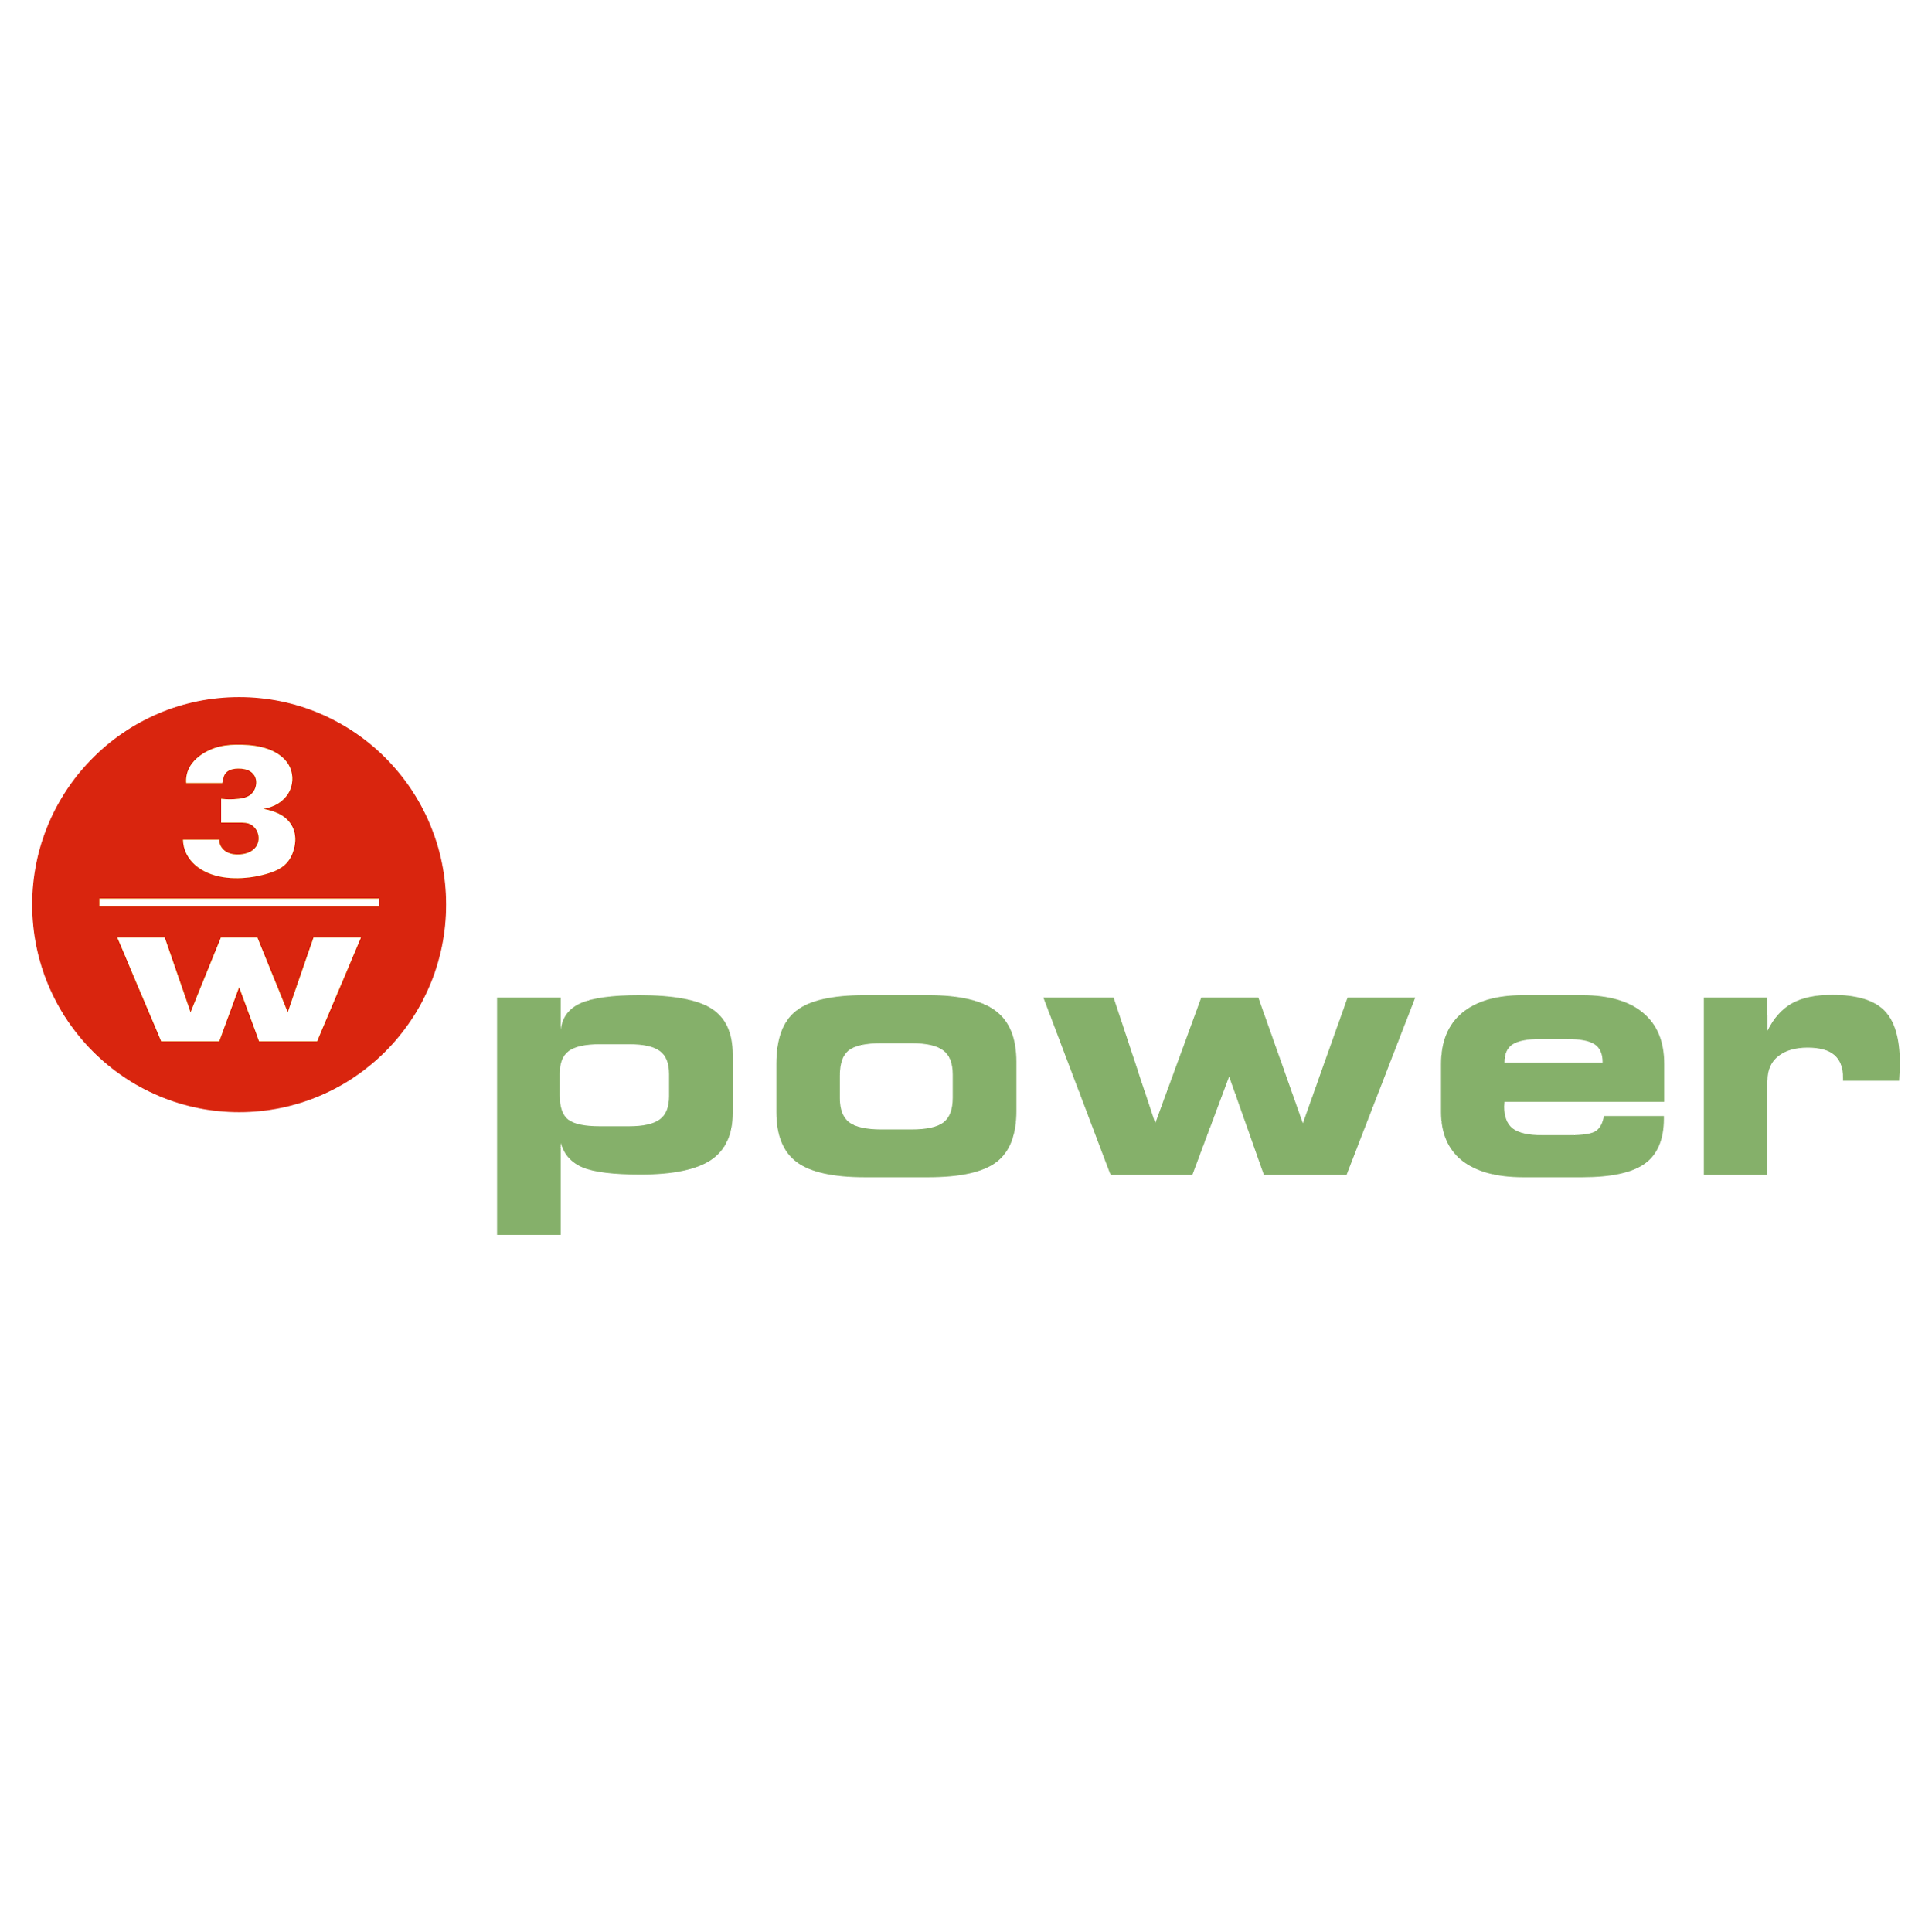 3W Power Logo Transparent Picture